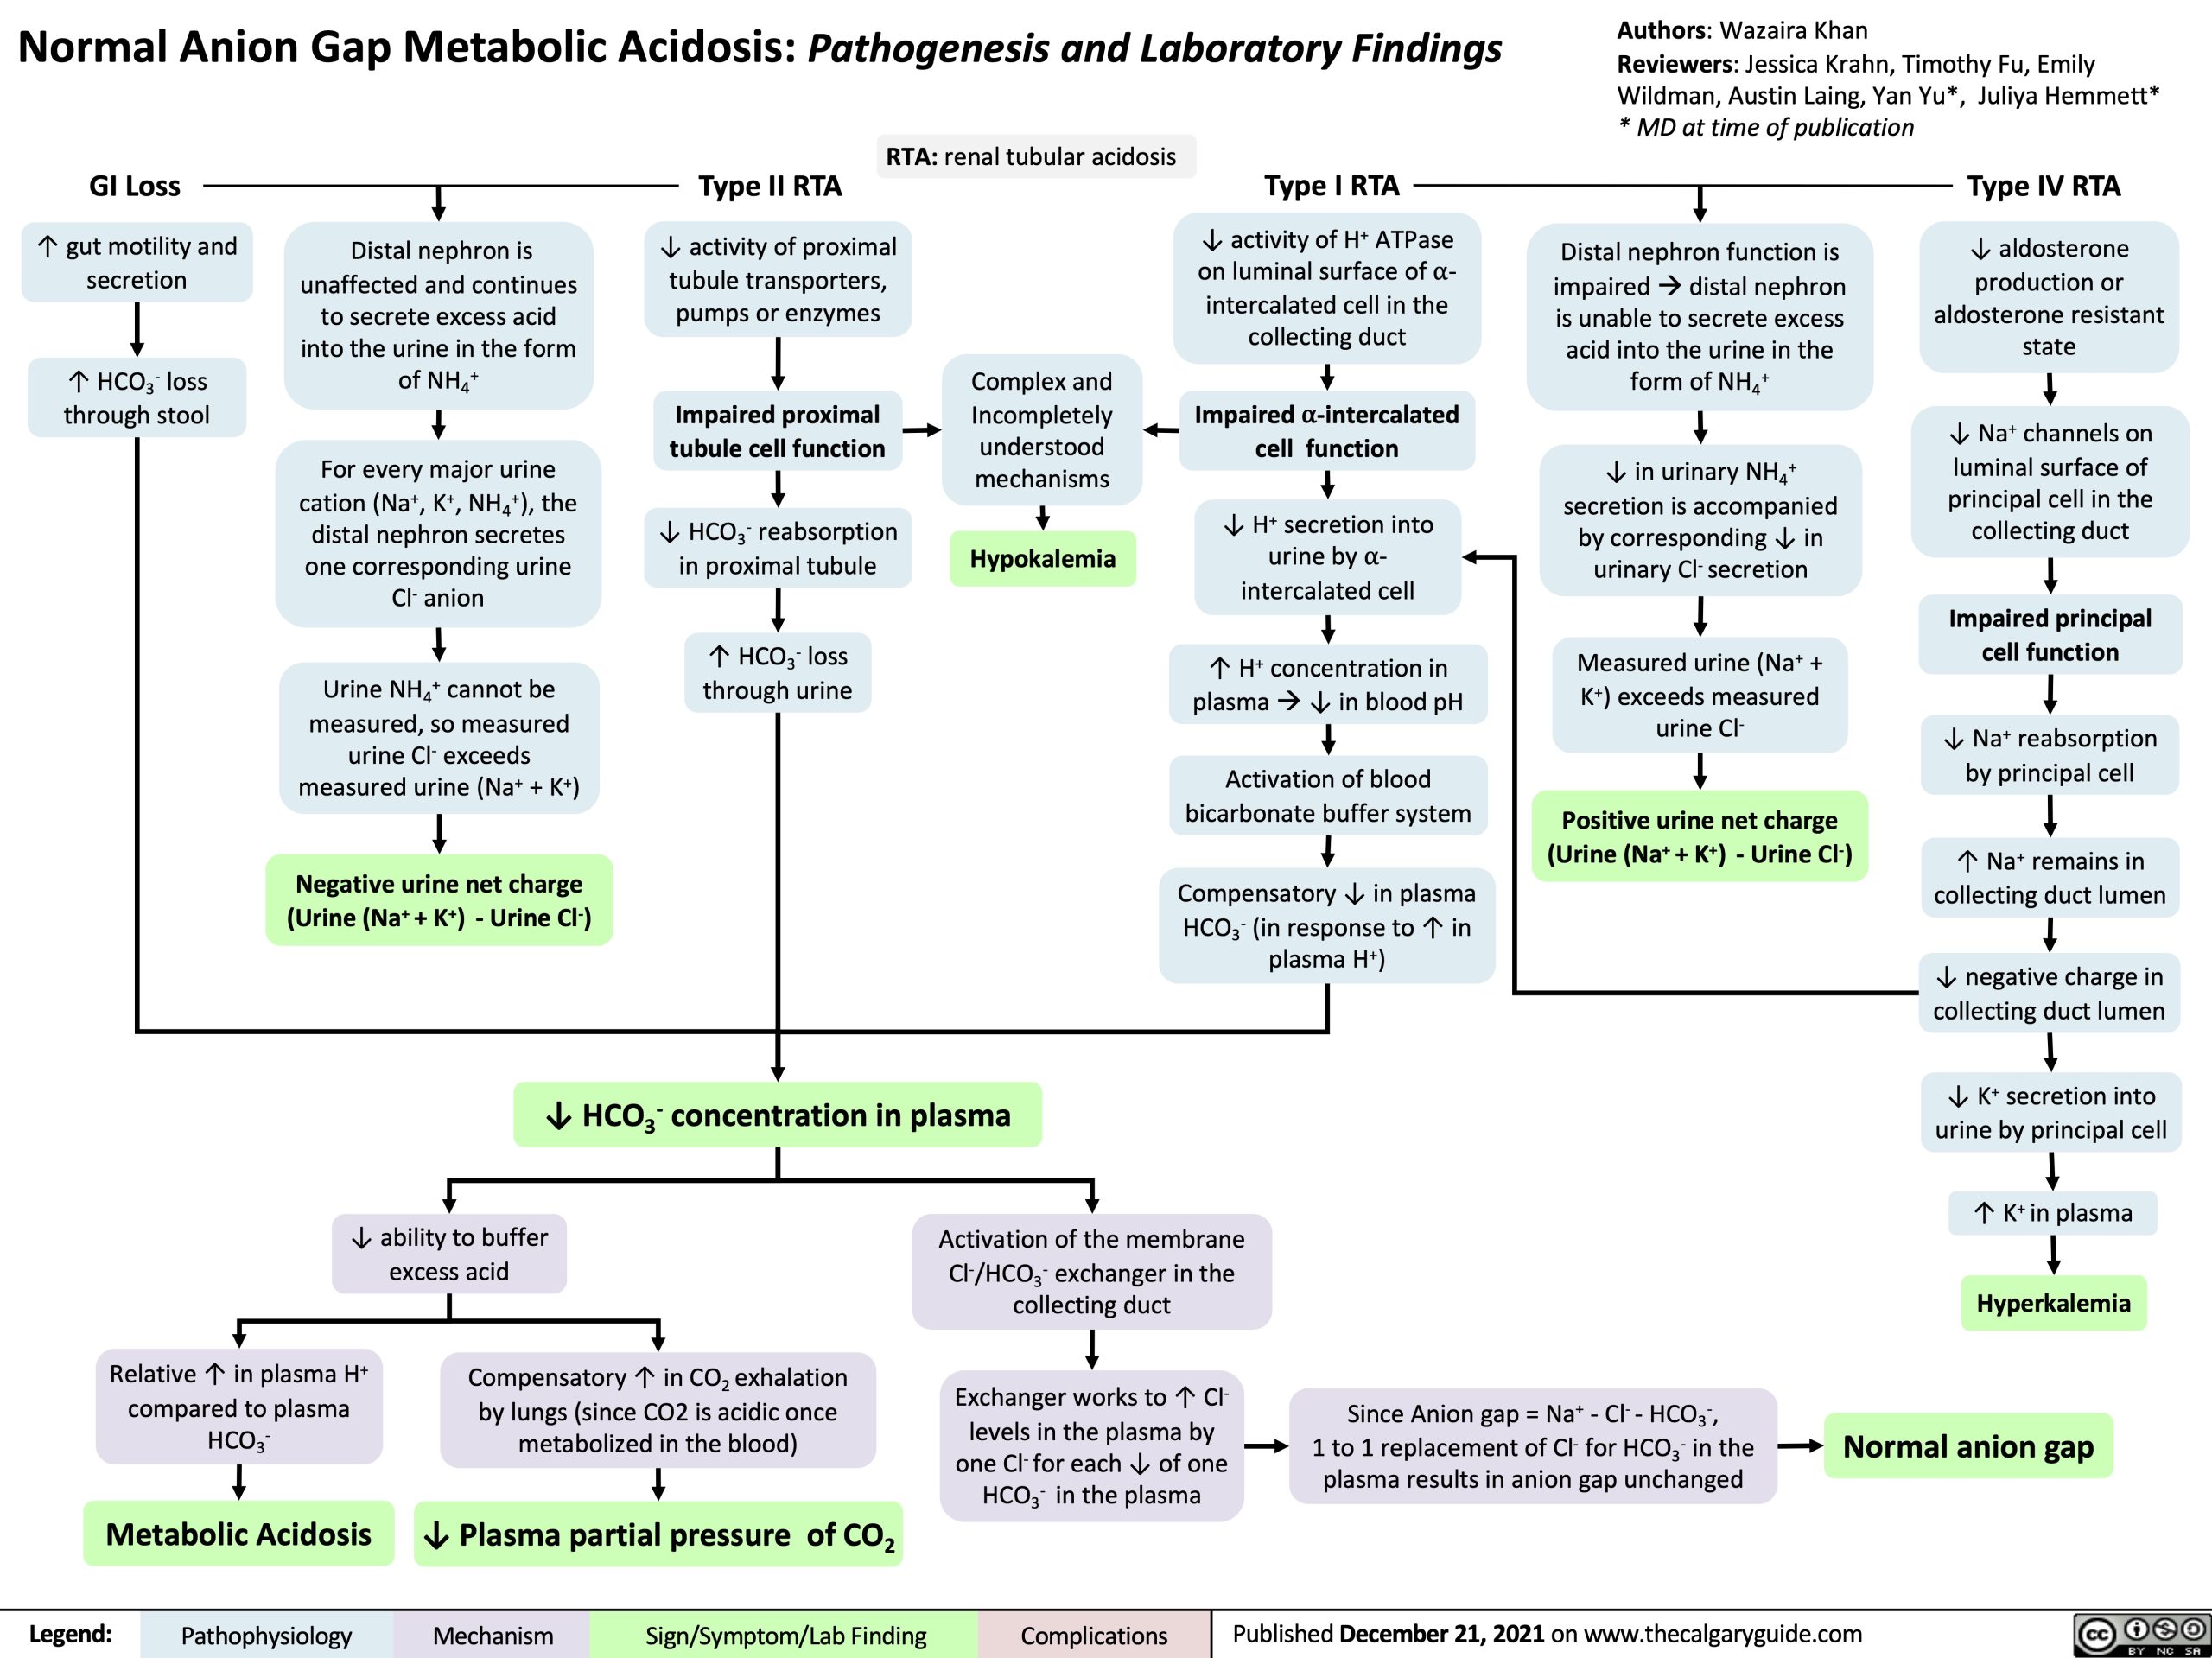 Normal Anion Gap Metabolic Acidosis: Pathogenesis and Laboratory Findings